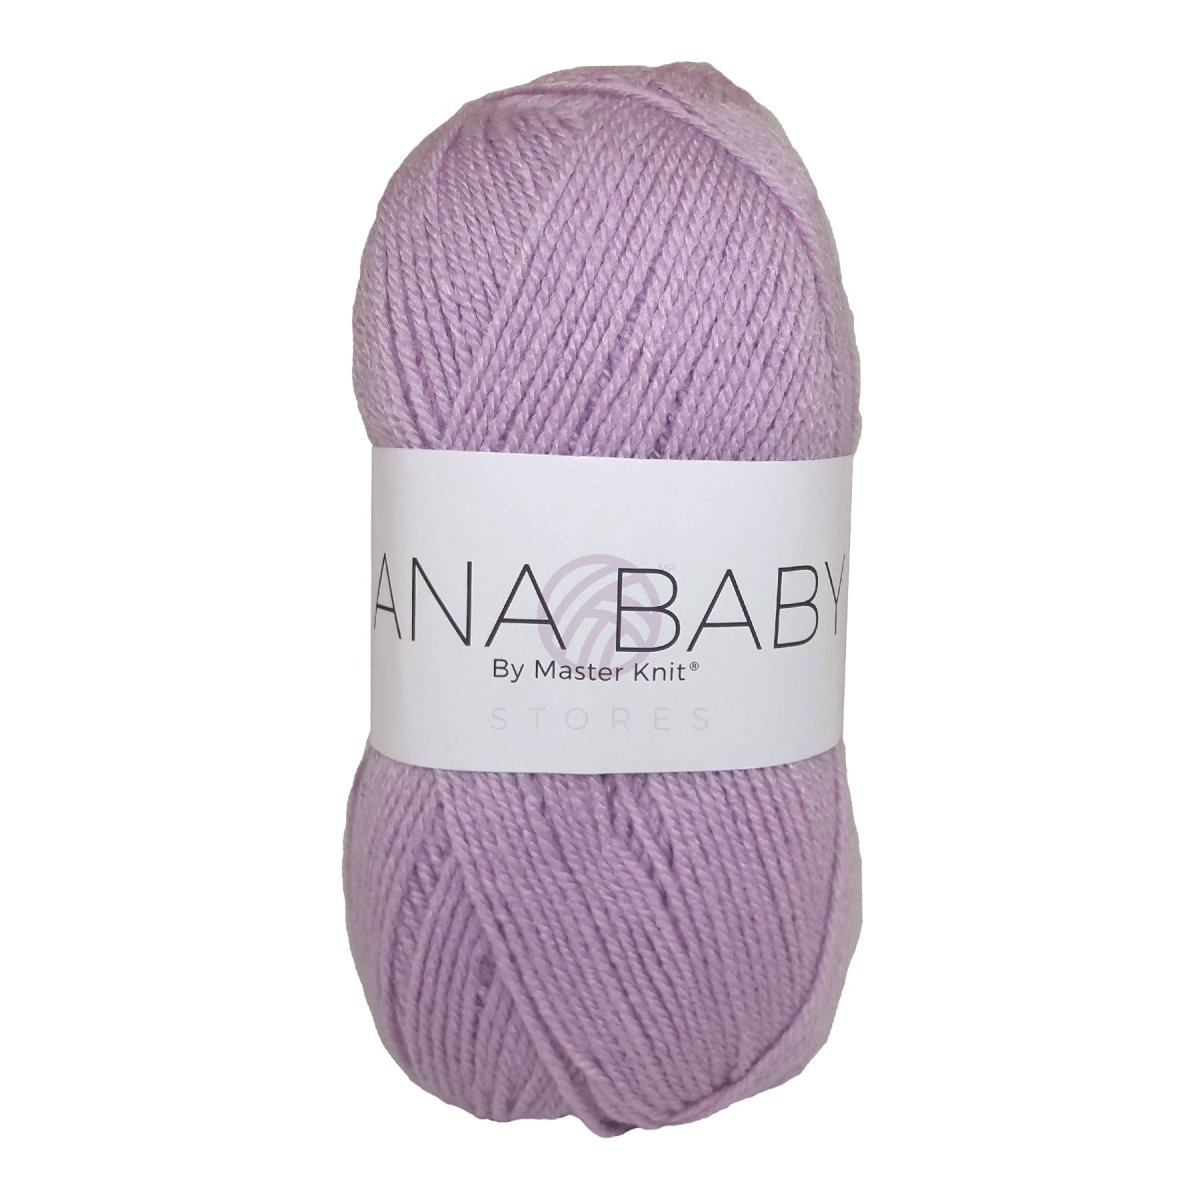 ANA BABY - Crochetstores9170-154